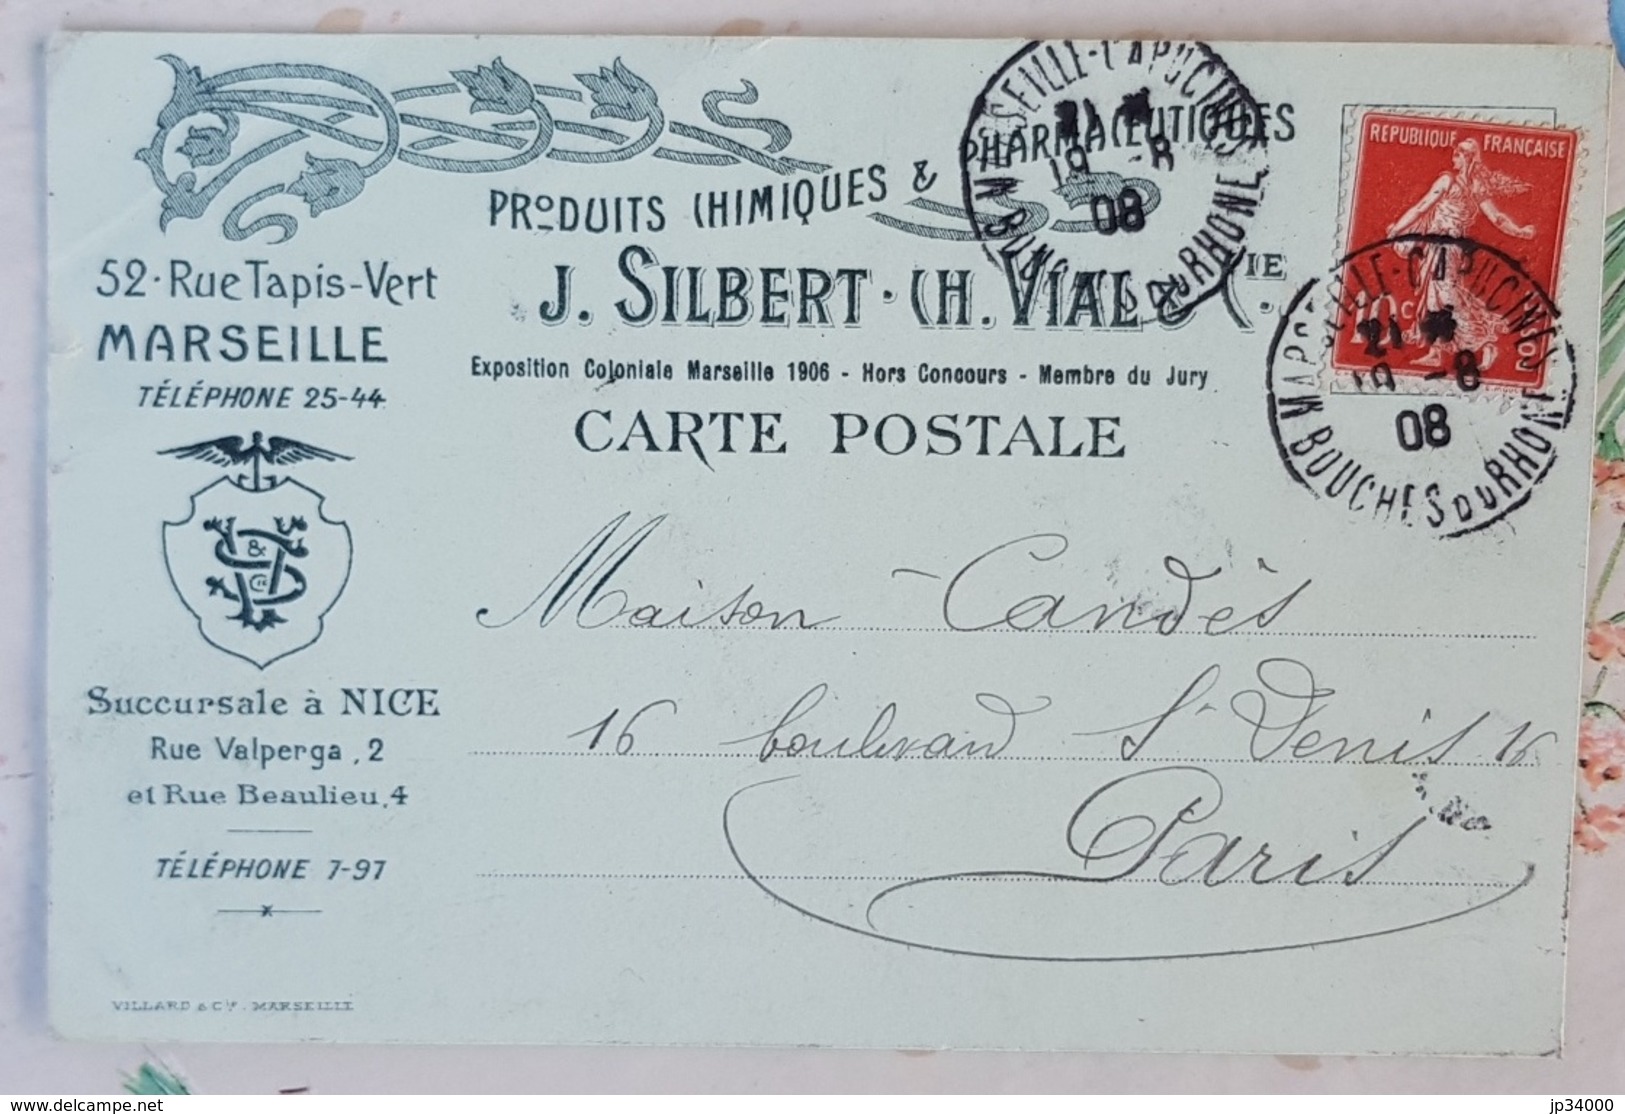 FRANCE Phamarcie, Medecine, Carte Postale Publicitaire SILBERT. VIAL à Marseille 1908 - Farmacia